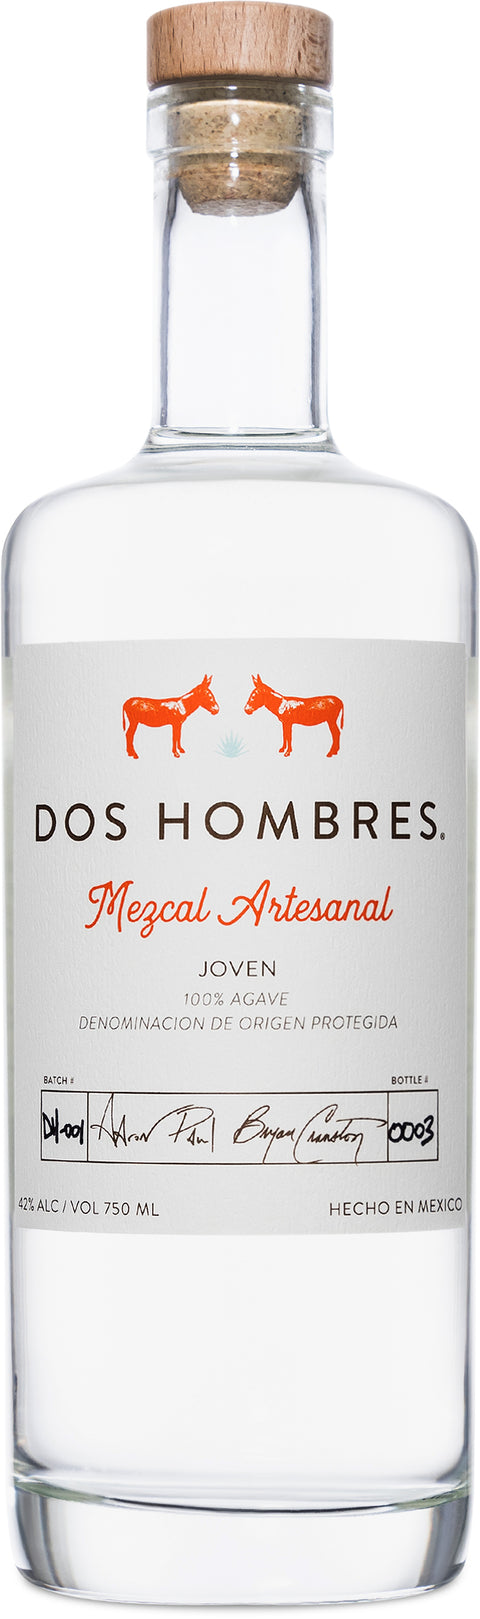 Dos Hombres Mezcal Artesanal Joven / w Fever Tree Sparkling Grapefruit gift 750 ml